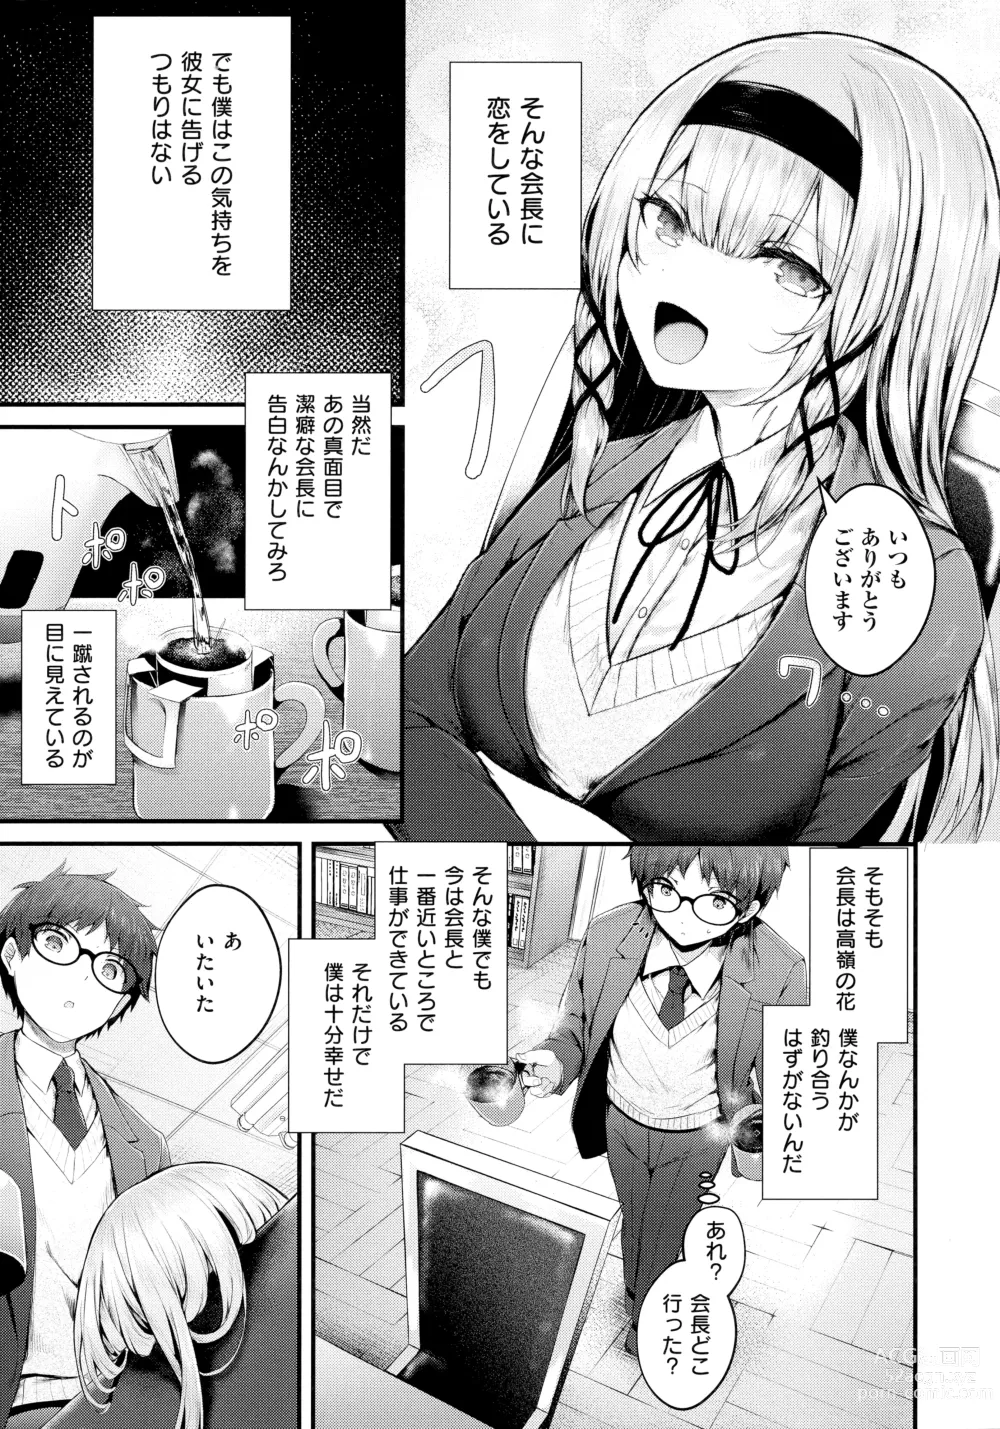 Page 9 of manga Namaiki Love Hole + Melonbooks Kounyu Tokuten + Toranoana Kounyu Tokuten